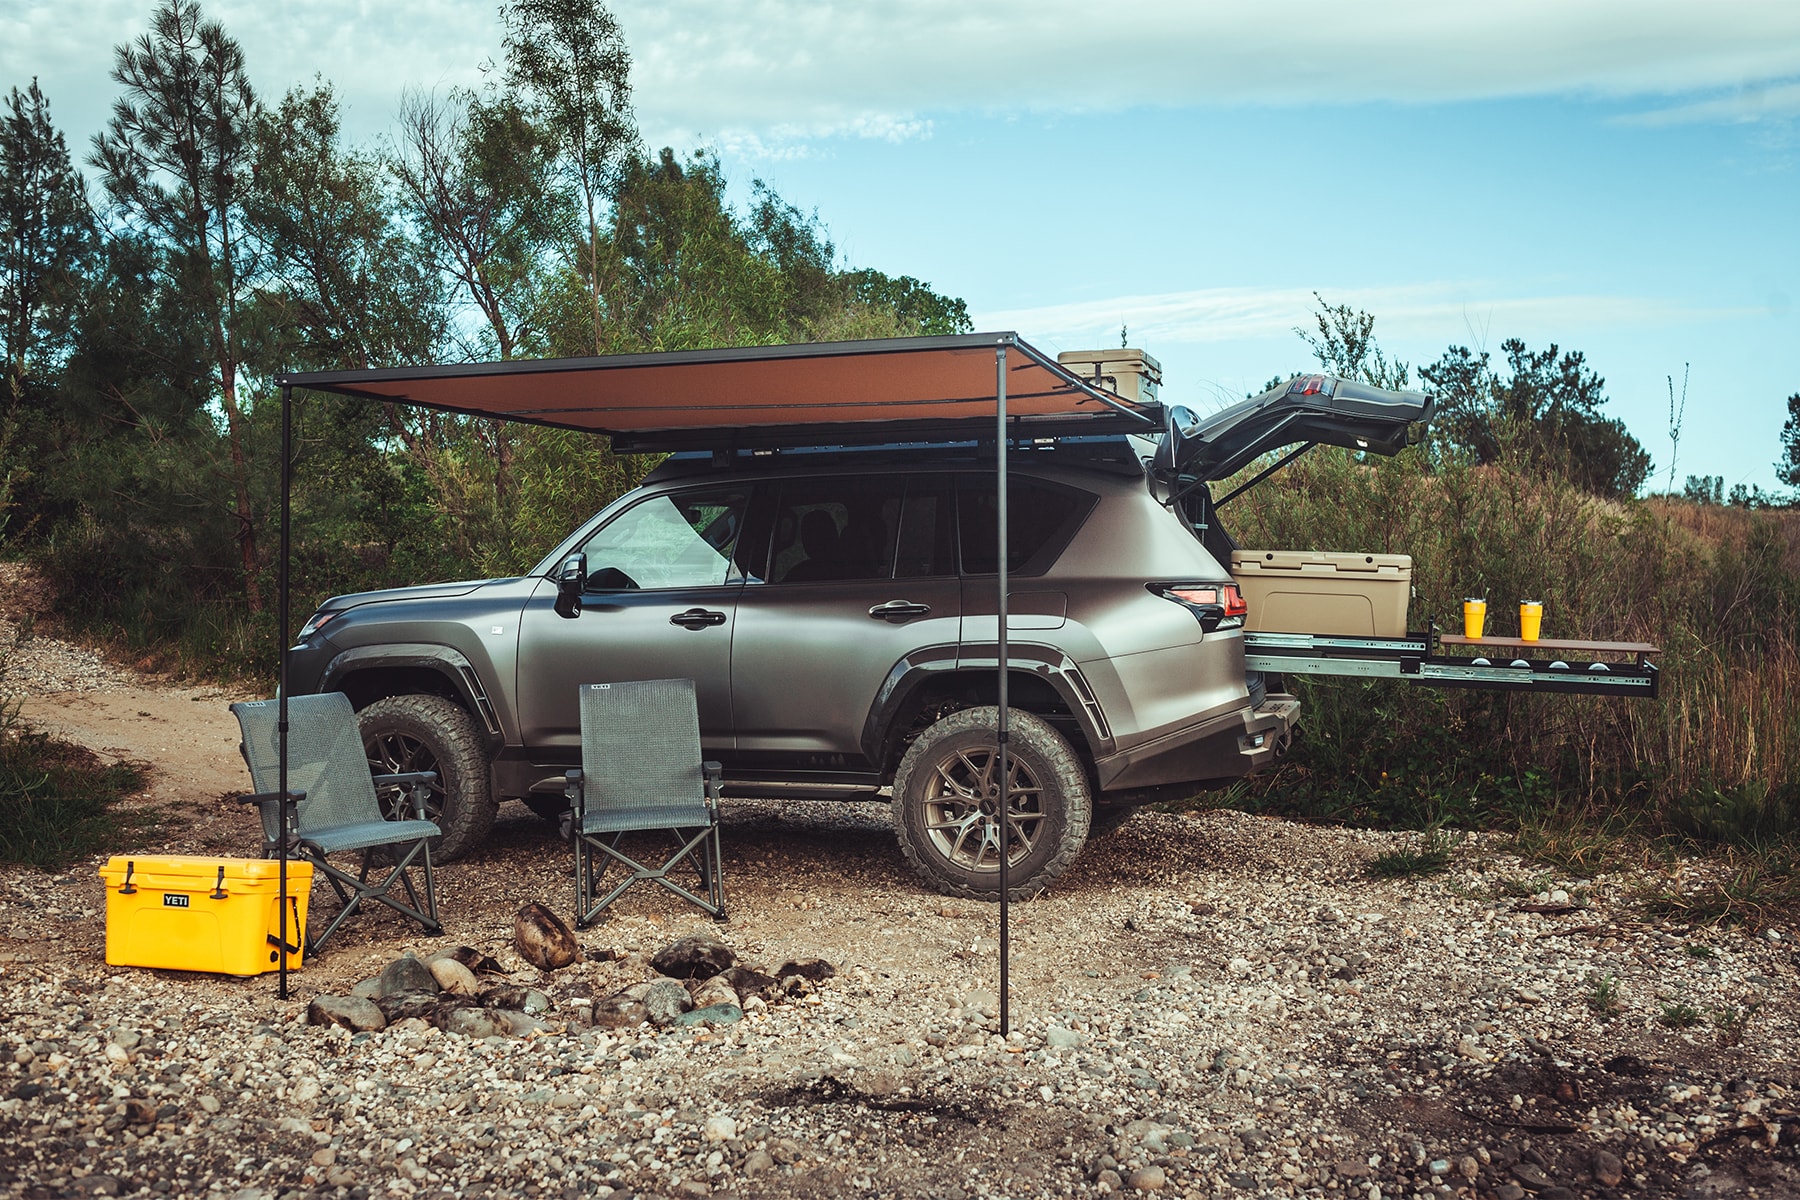 lexus USA Yeti Hiraku overlander SUV LX600 Alpine SEMA info suvs luxury camping outdoors 